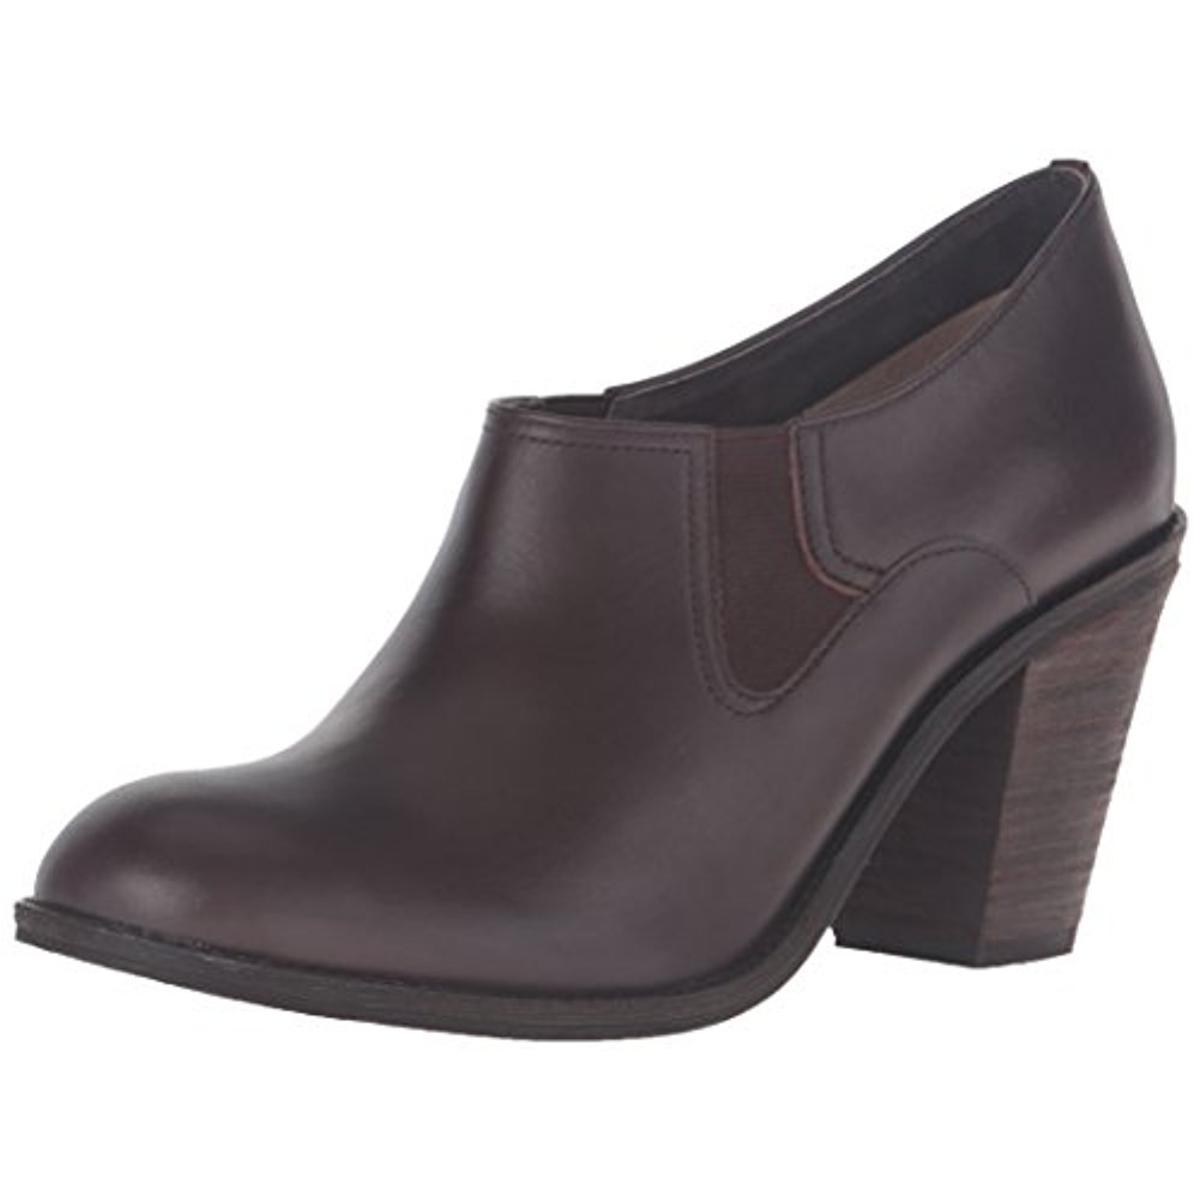 SoftWalk 6173 Womens Fargo Leather Heels Ankle Shooties Shoes BHFO | eBay